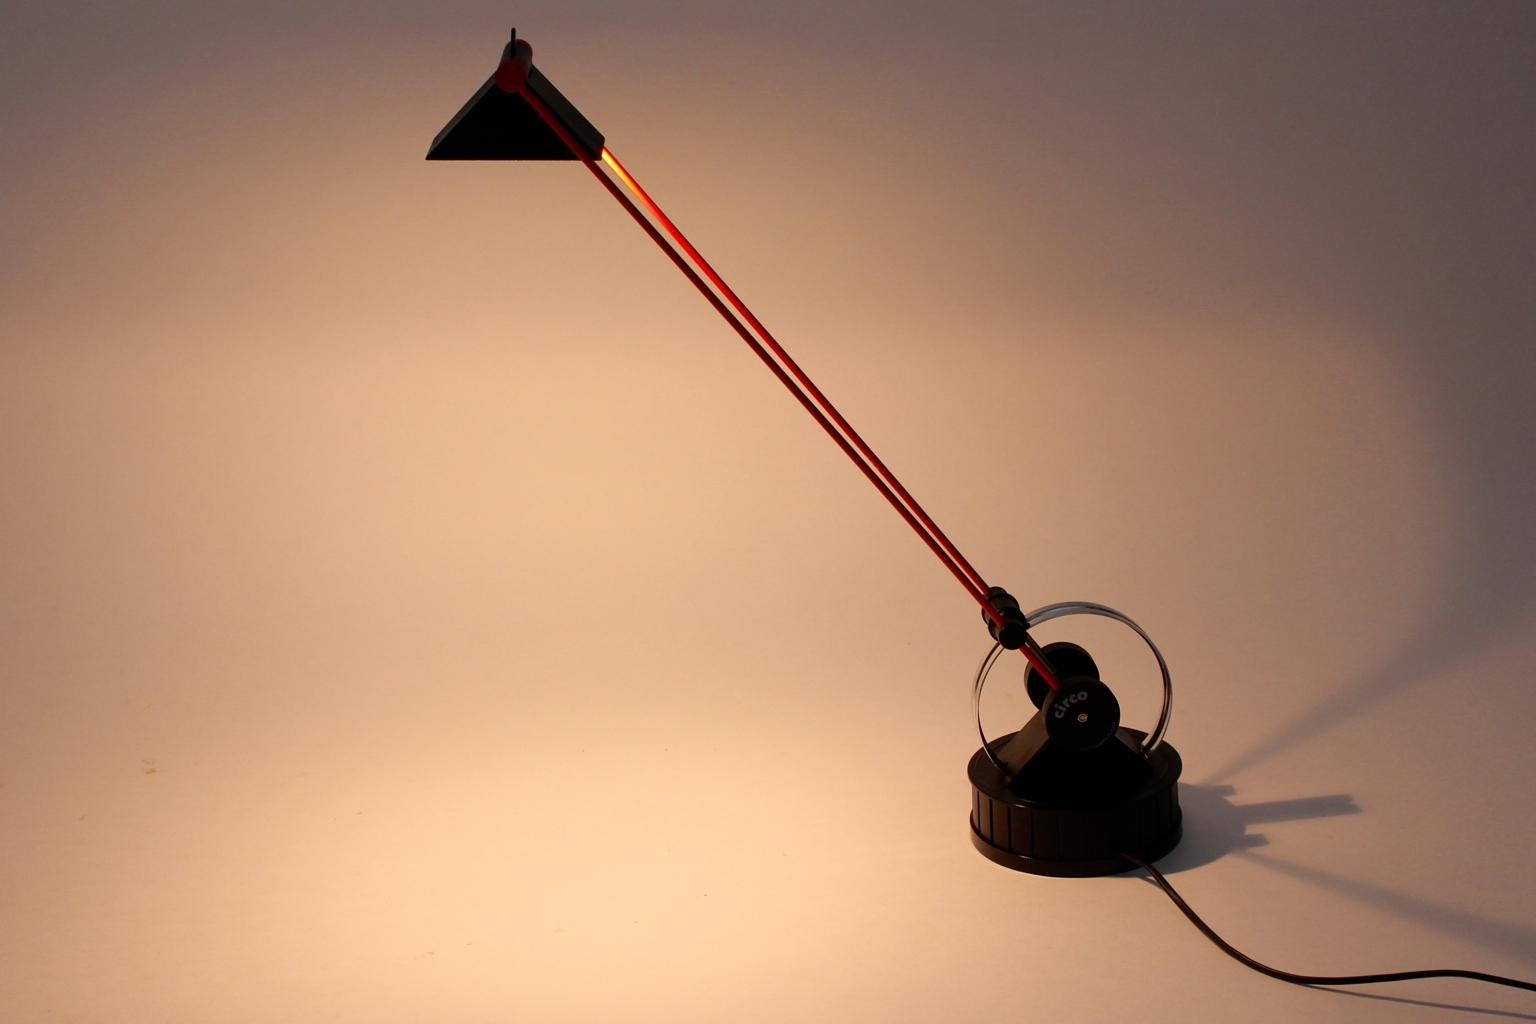 Metal Modern Red and Black Plastic Vintage Desk Lamp by Linke Plewa Germany 1990s For Sale